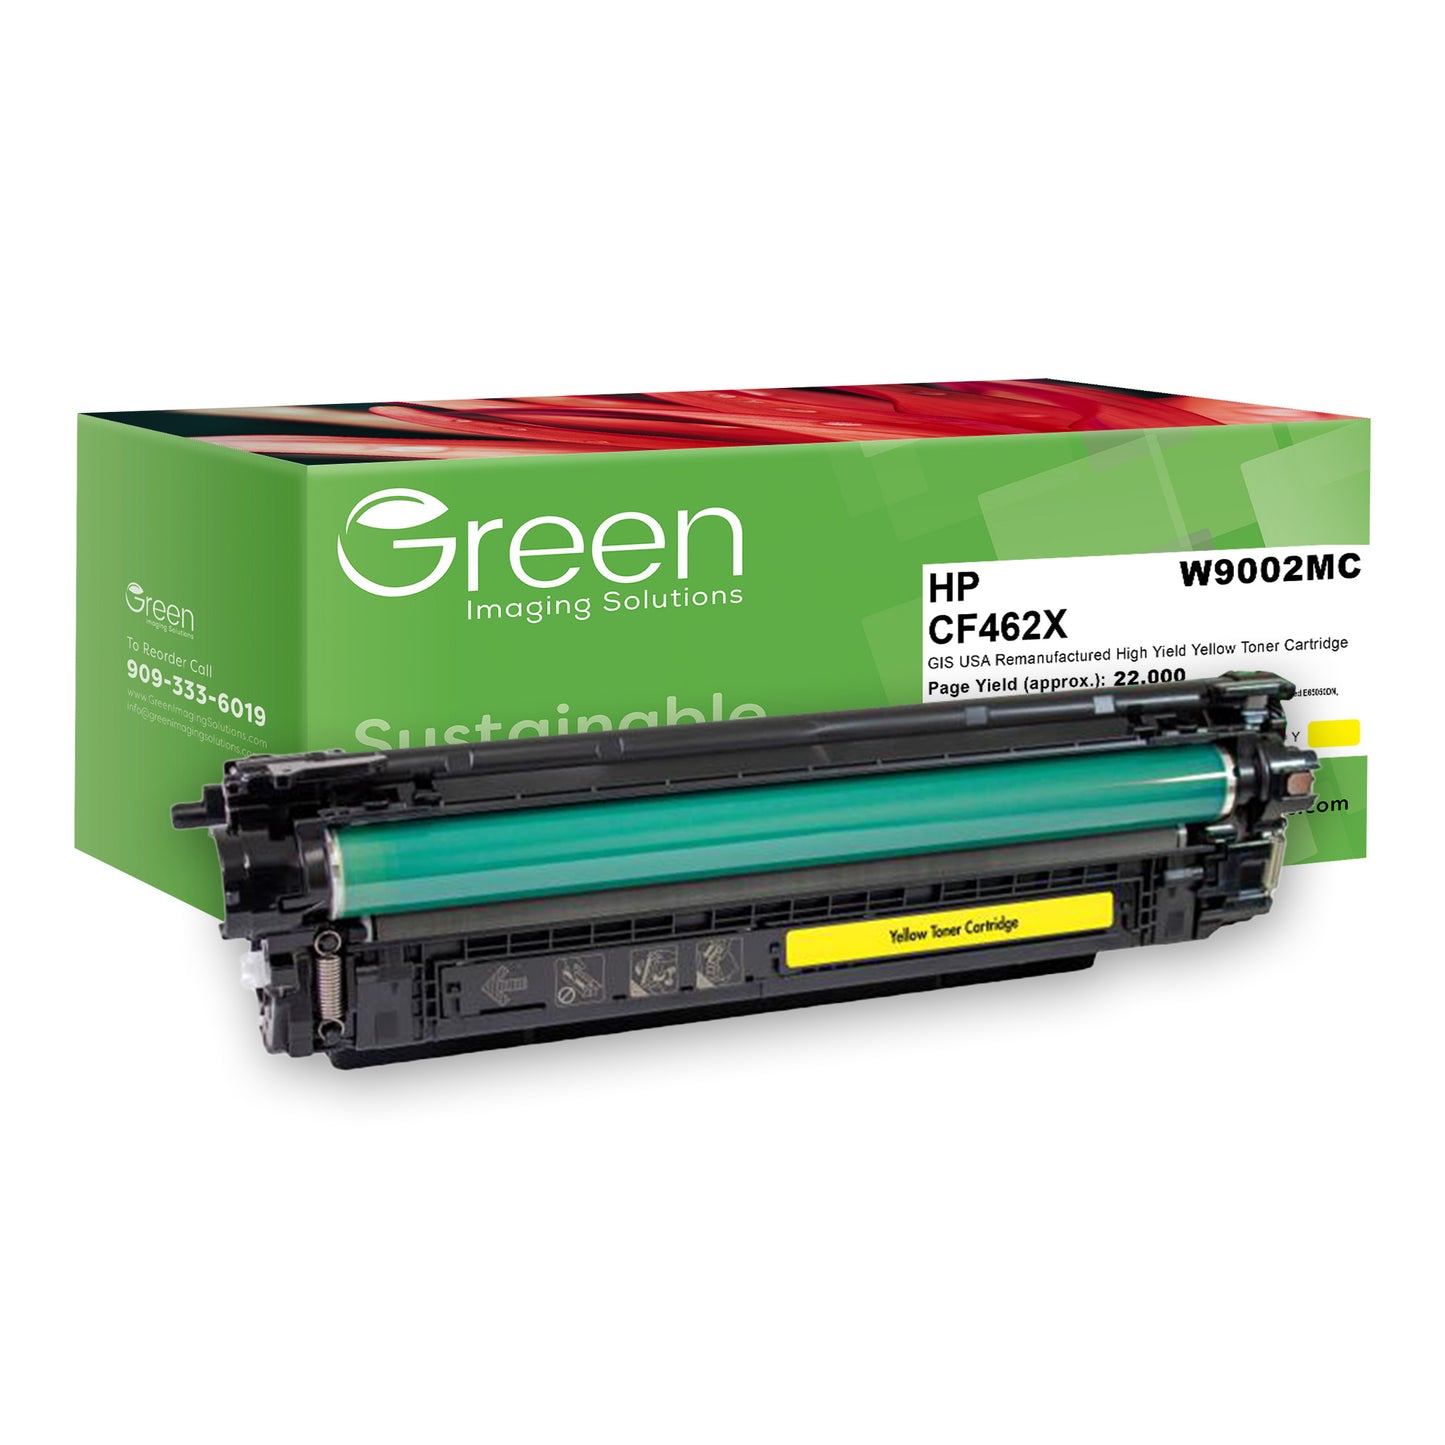 Green Imaging Solutions USA Remanufactured High Yield Yellow Toner Cartridge for HP 656X (CF462X/W9002MC)